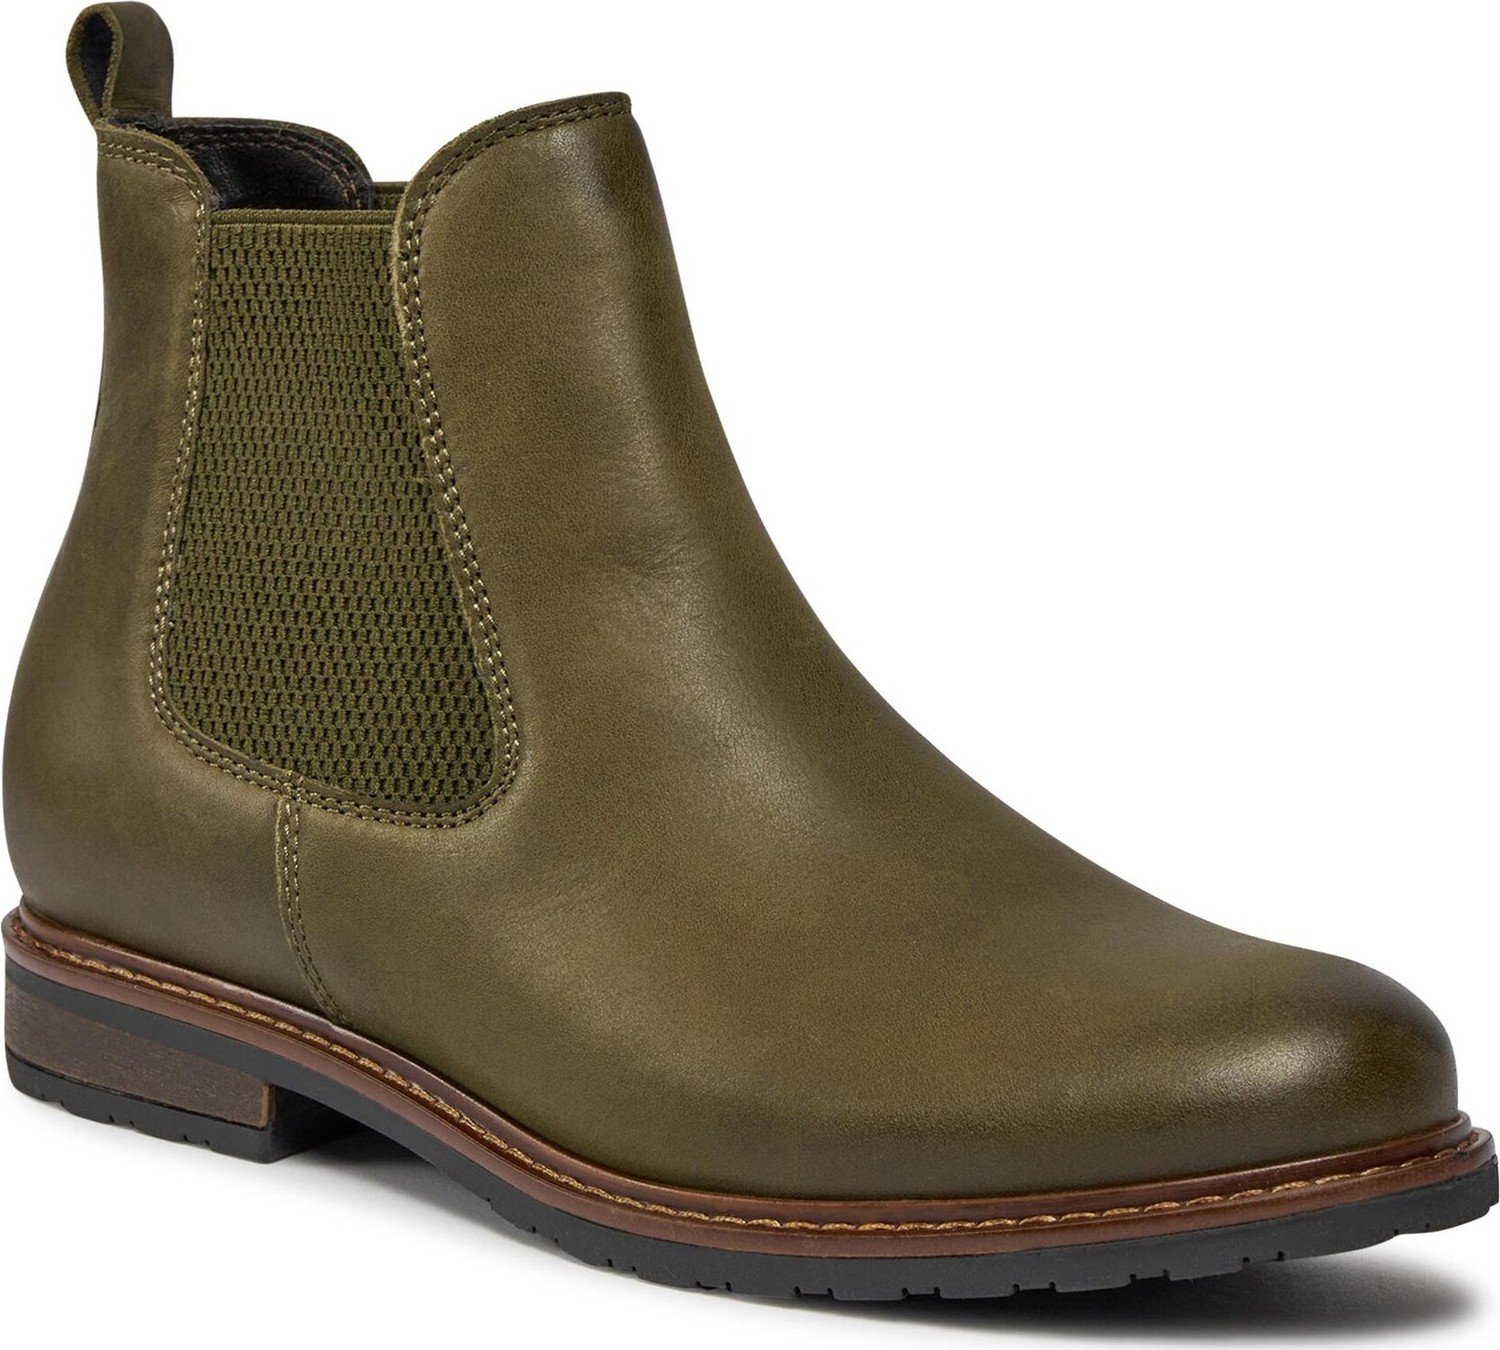 Kotníková obuv s elastickým prvkem Tamaris 1-25056-41 Olive Leather 728